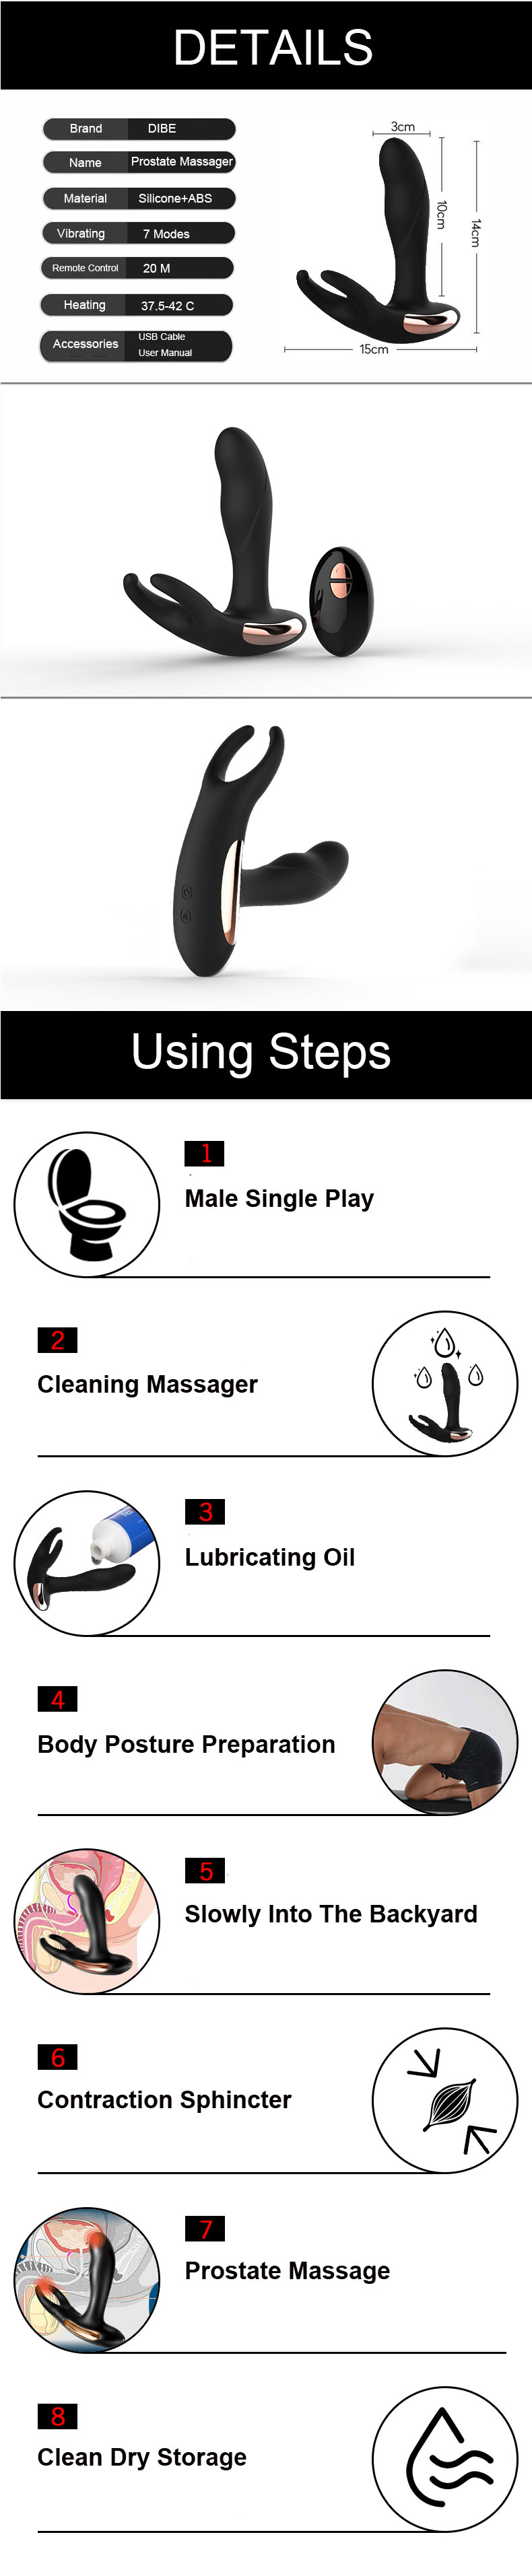 Dibe Male Prostate Massager details